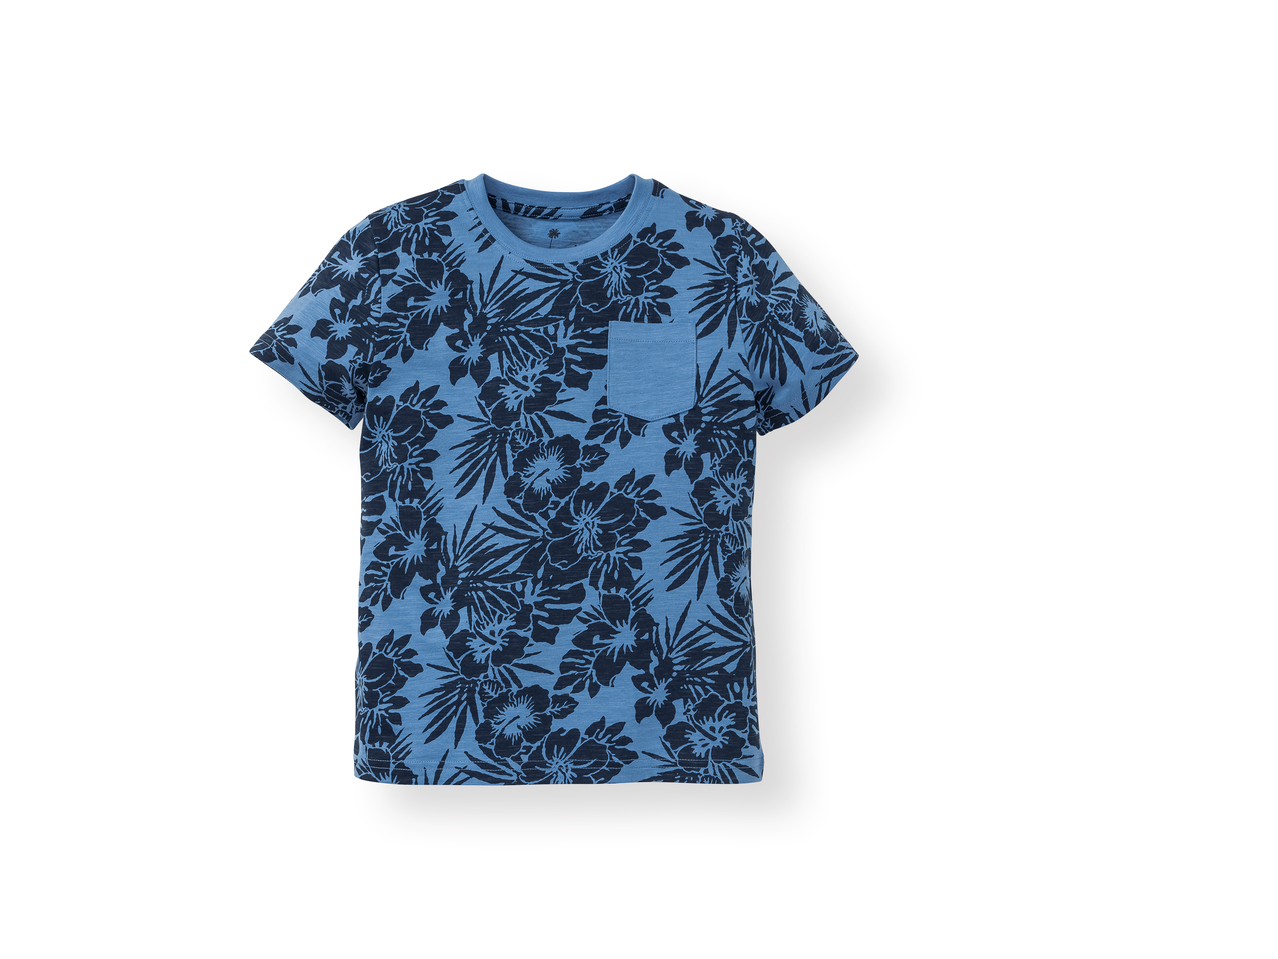 'Pepperts!(R)' Camiseta niños azulada 100% algodón